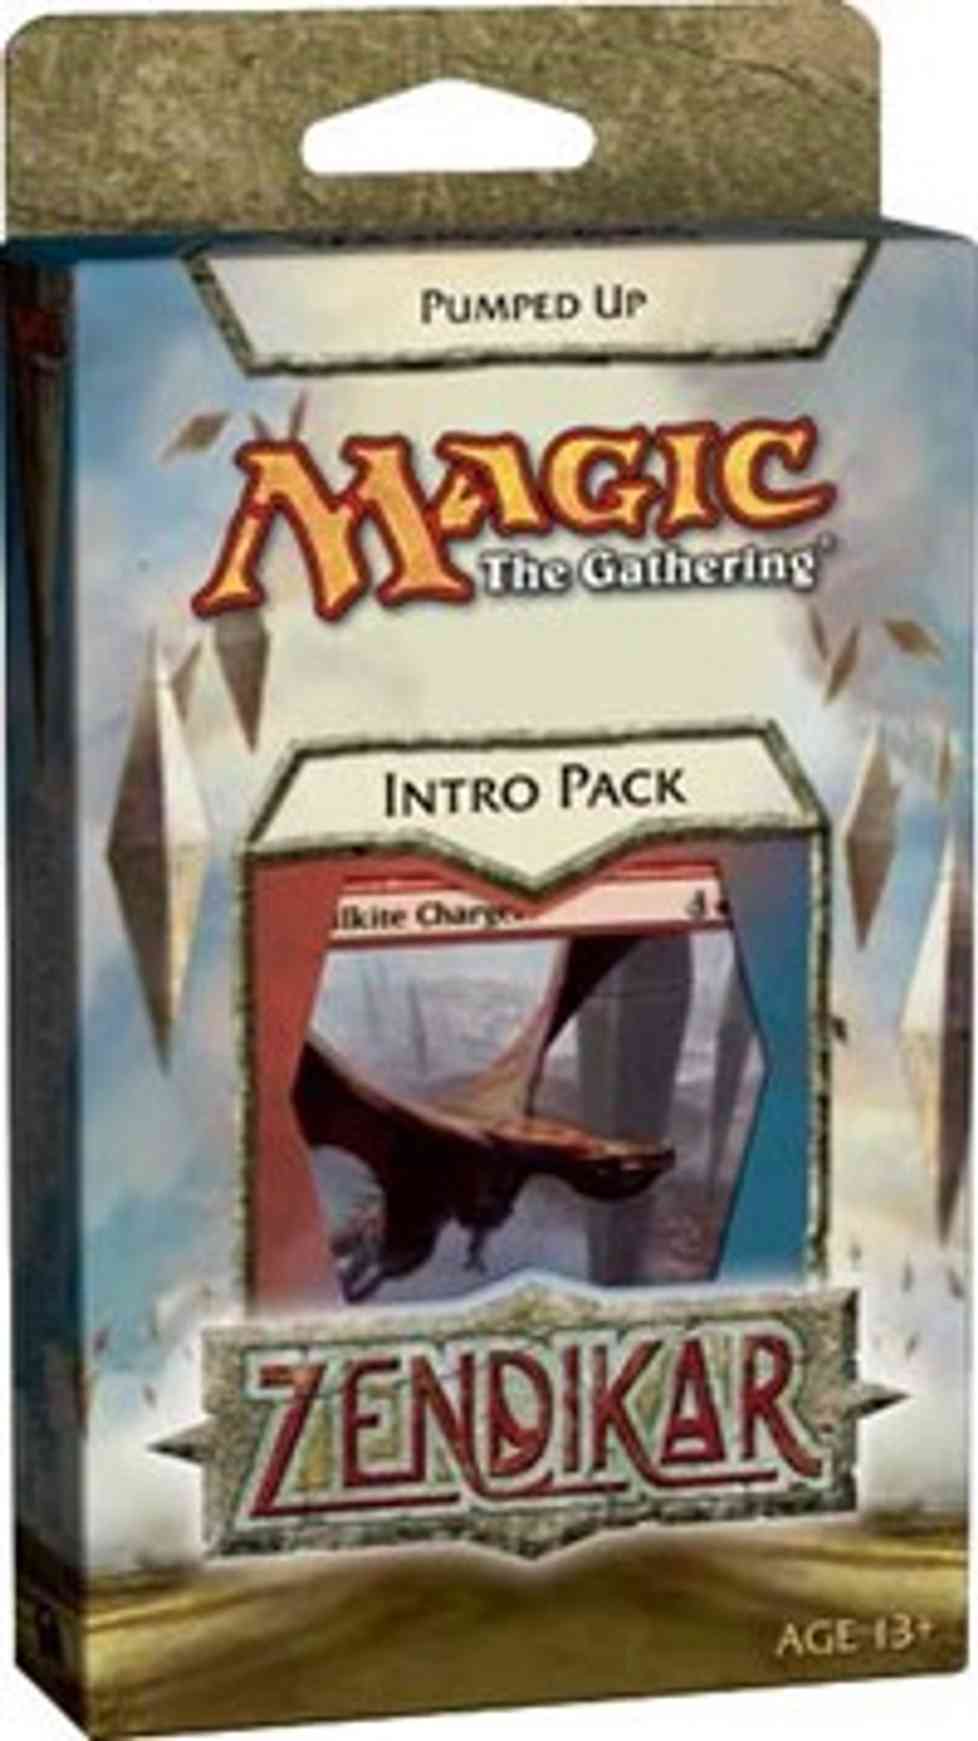 Zendikar - Intro Pack - Red - Pumped Up magic card front